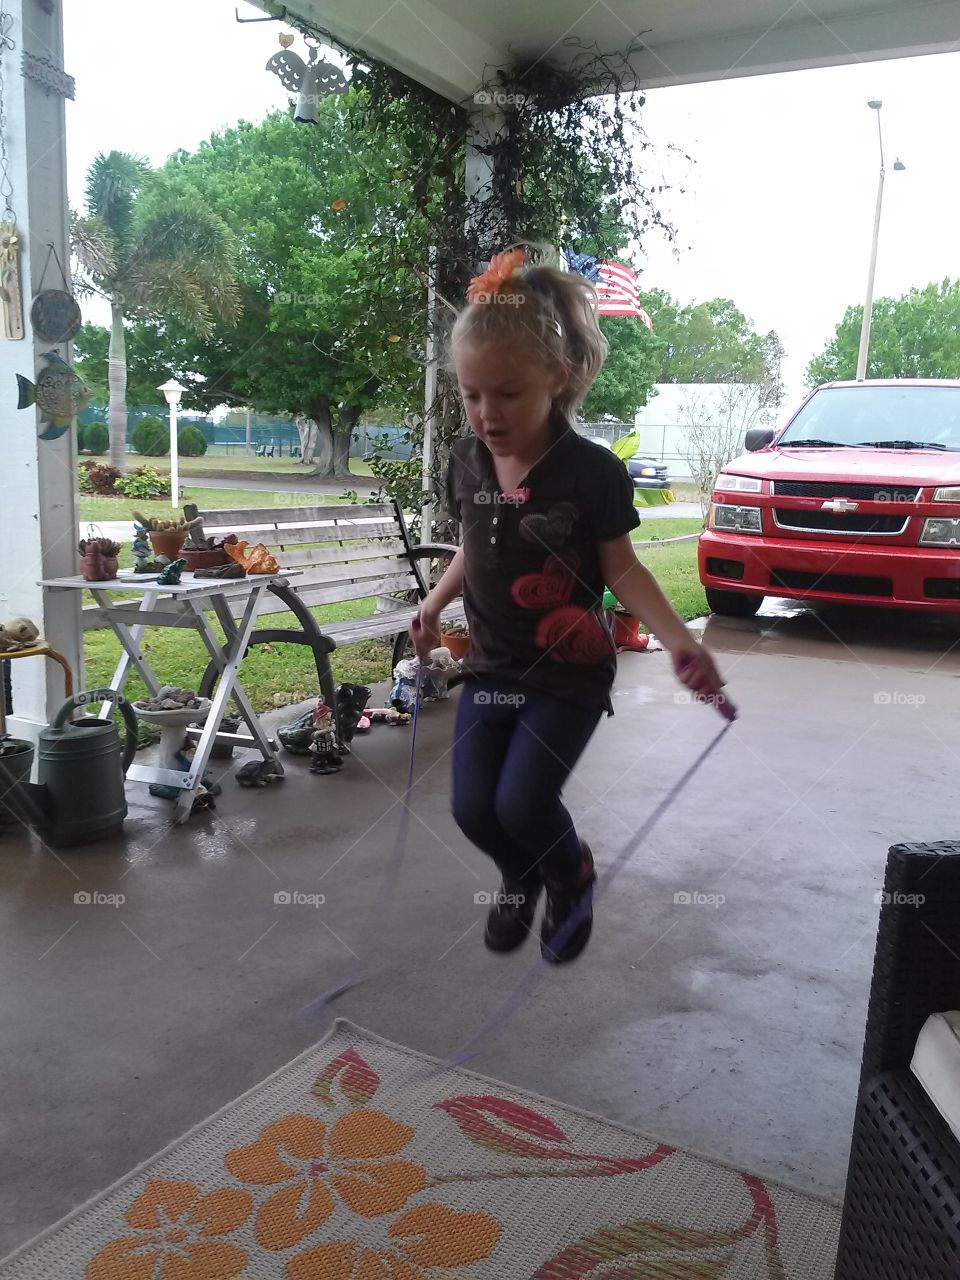 jump roping away. my niece jump roping 